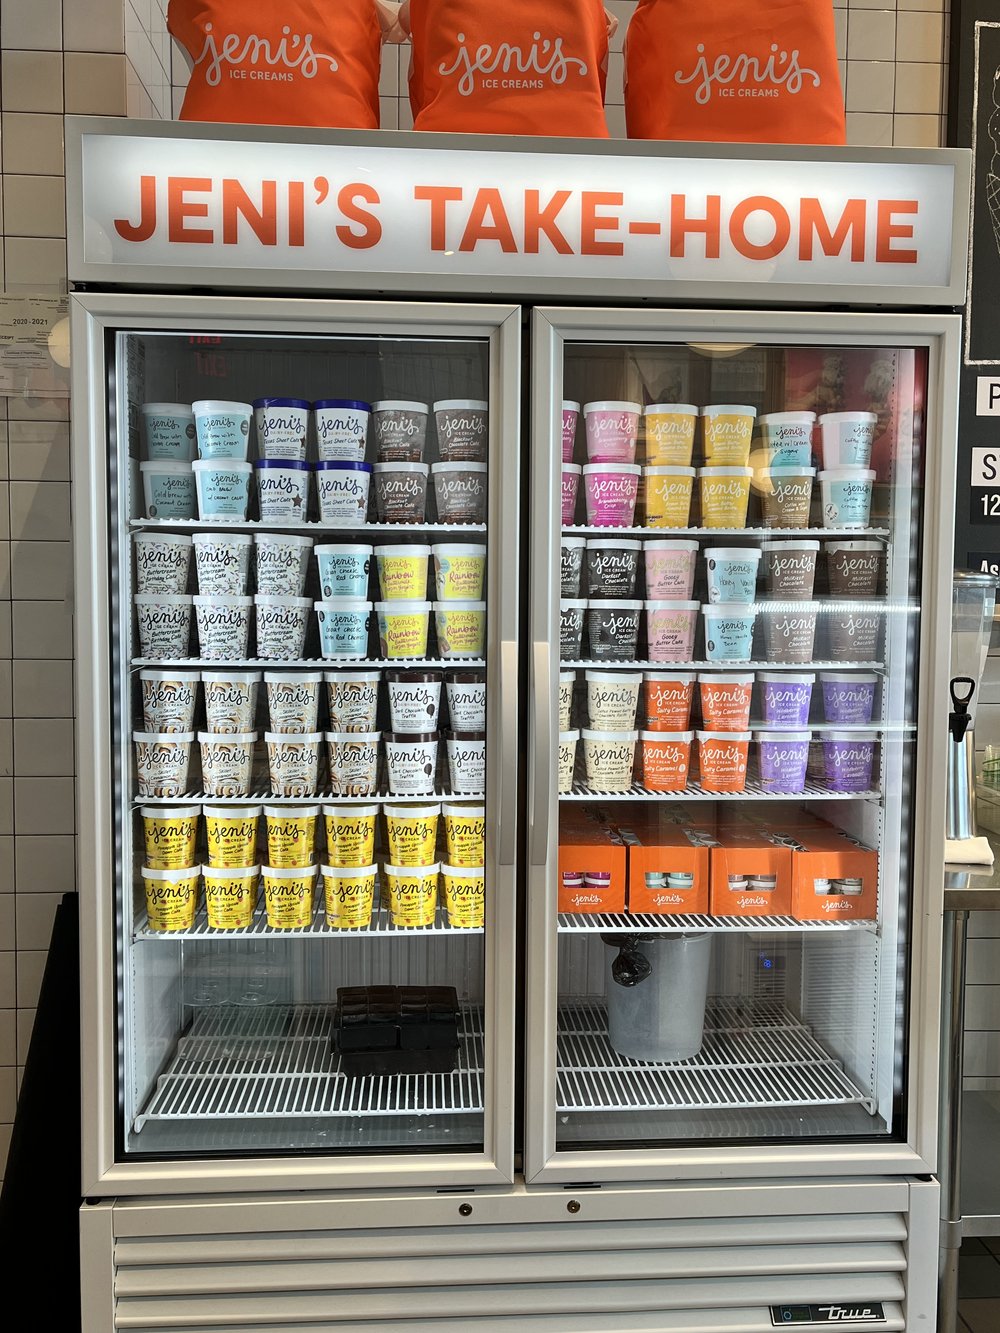 Jeni's ice creams take home.jpg